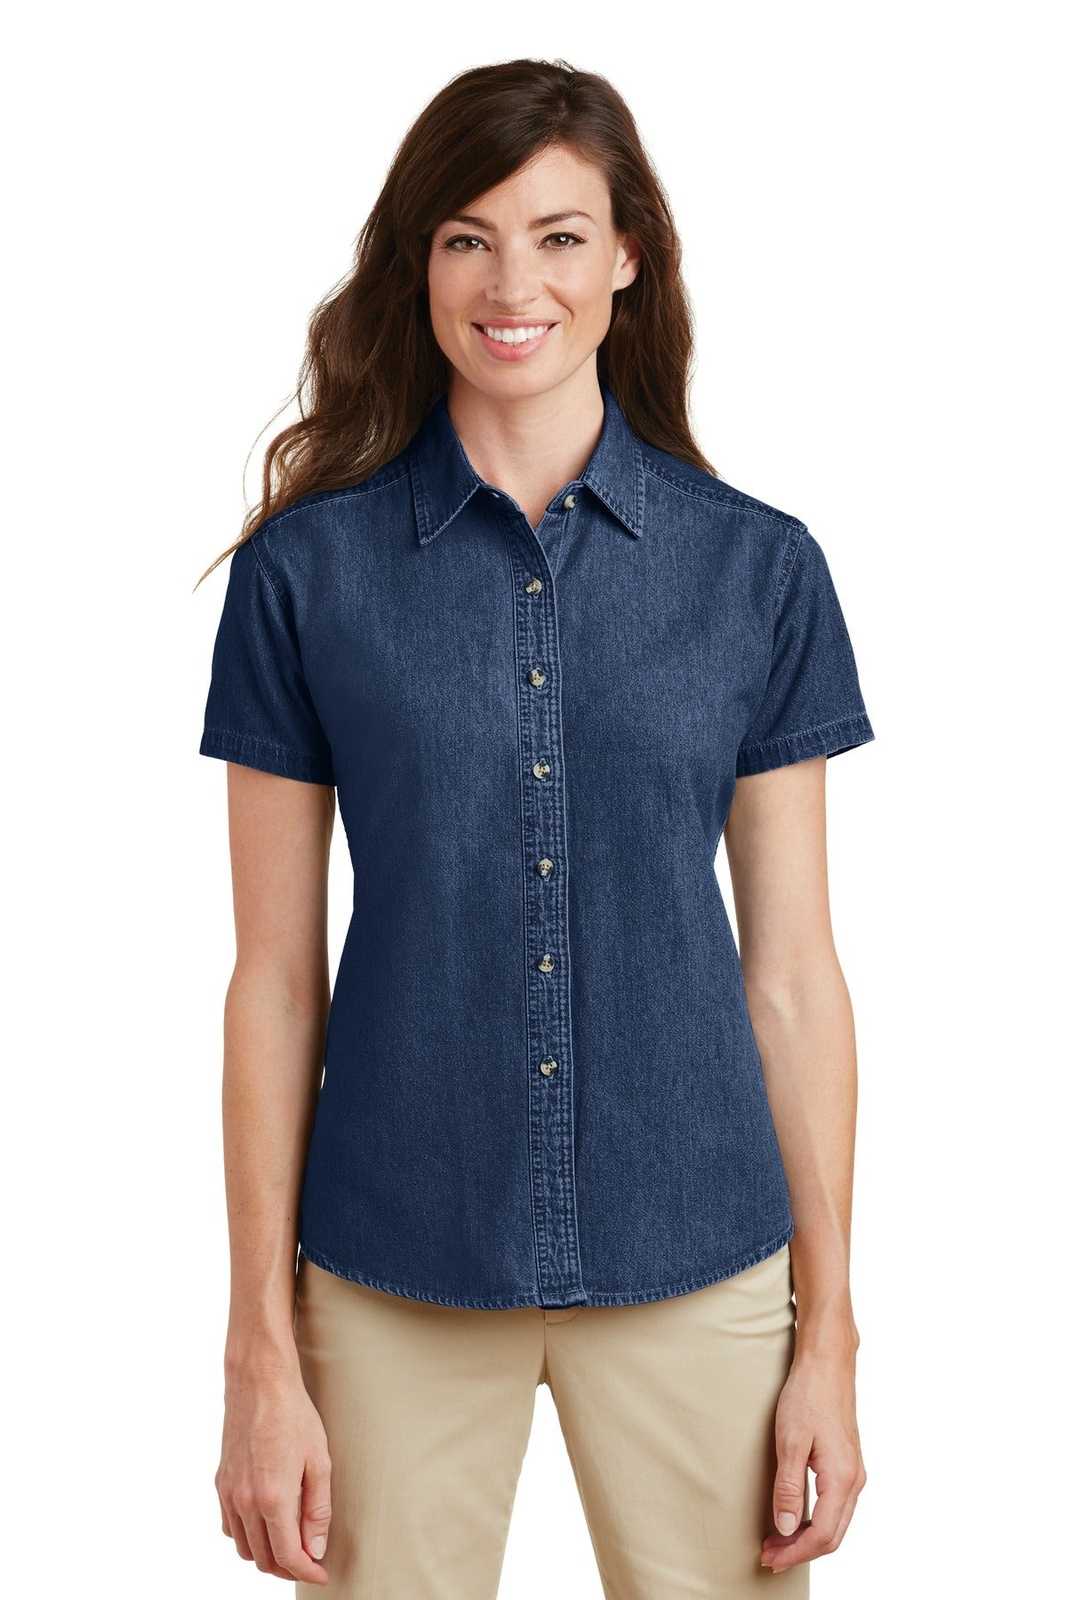 Port &amp; Company LSP11 Ladies Short Sleeve Value Denim Shirt - Ink Blue - HIT a Double - 1